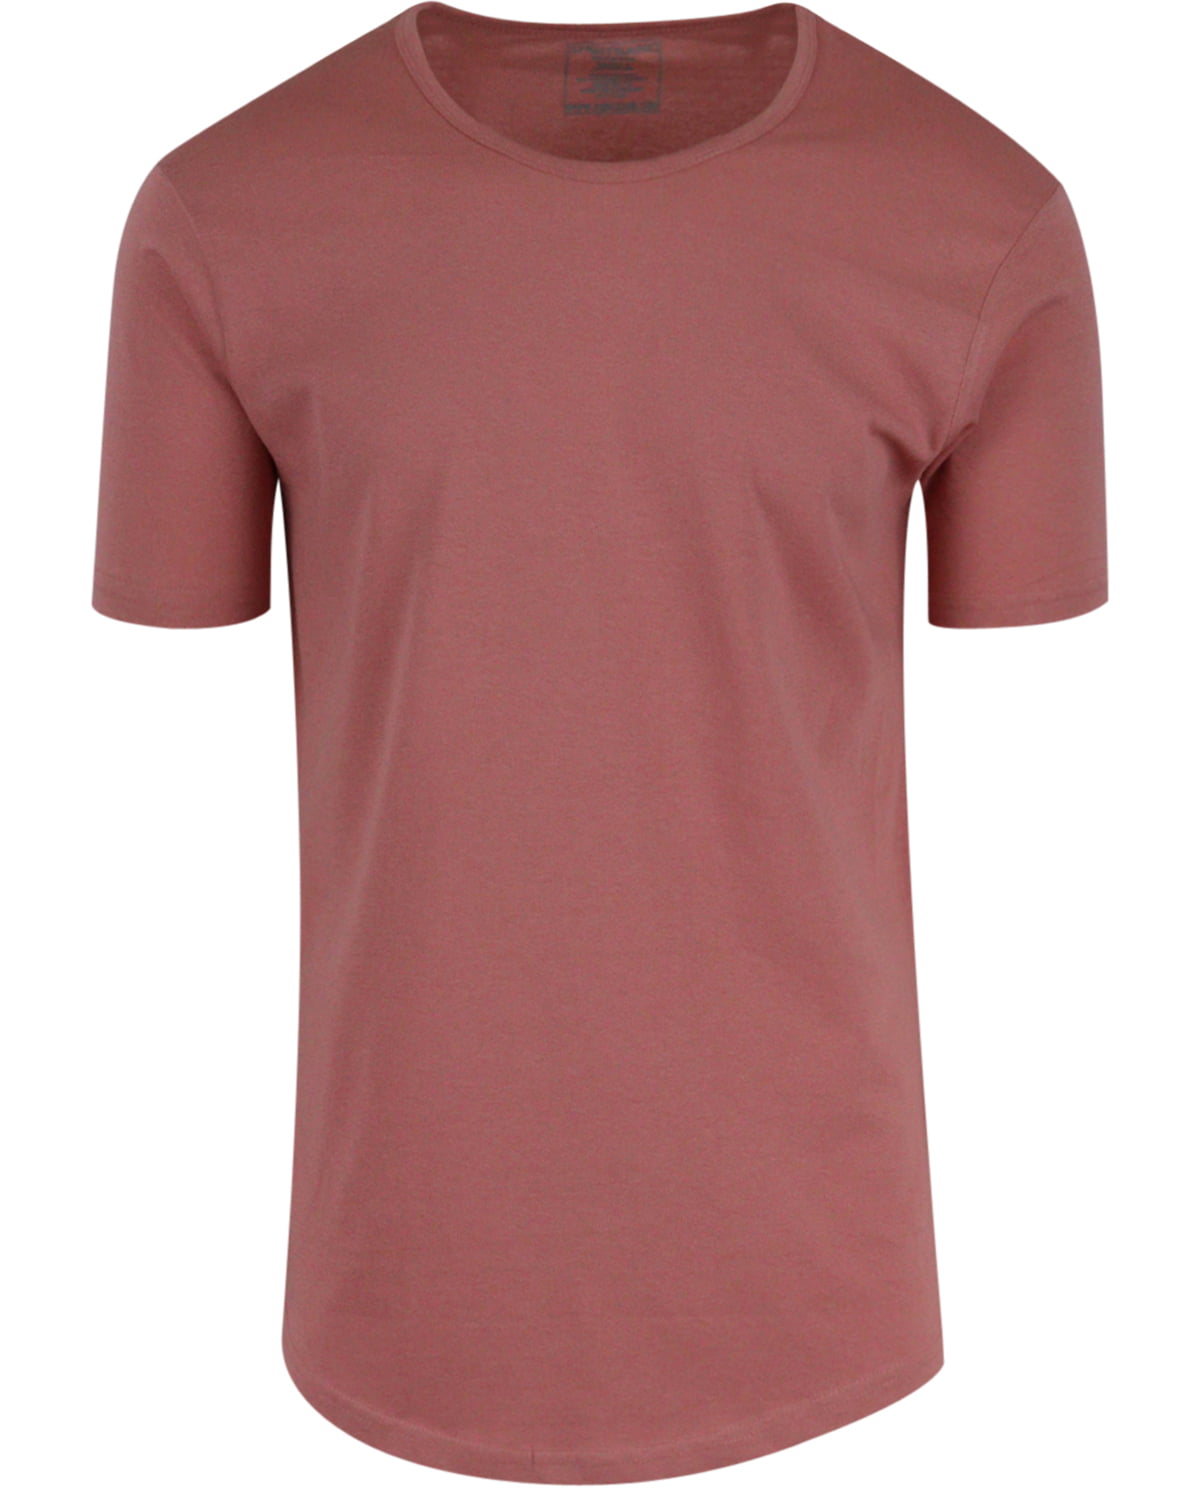 NEW Rare ! iron river ranch T-Shirt Gildan Size S To 2XL five color choices 